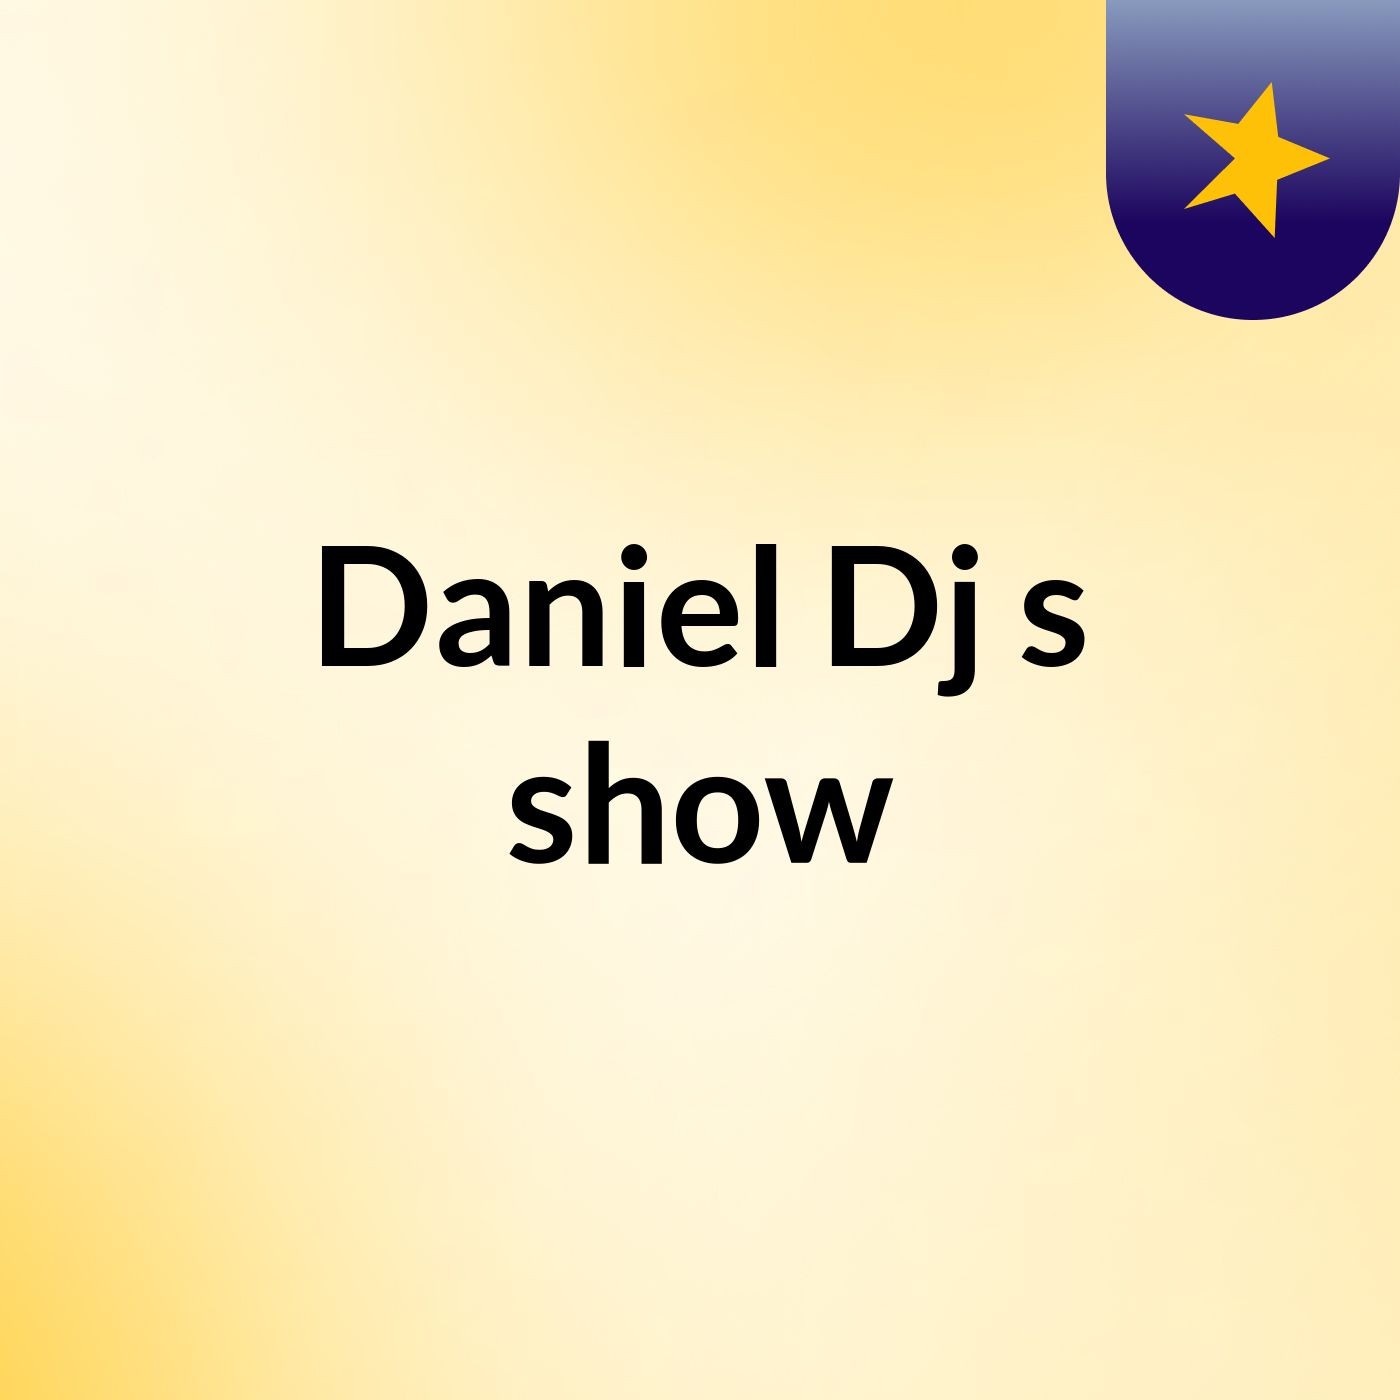 Daniel Dj's show